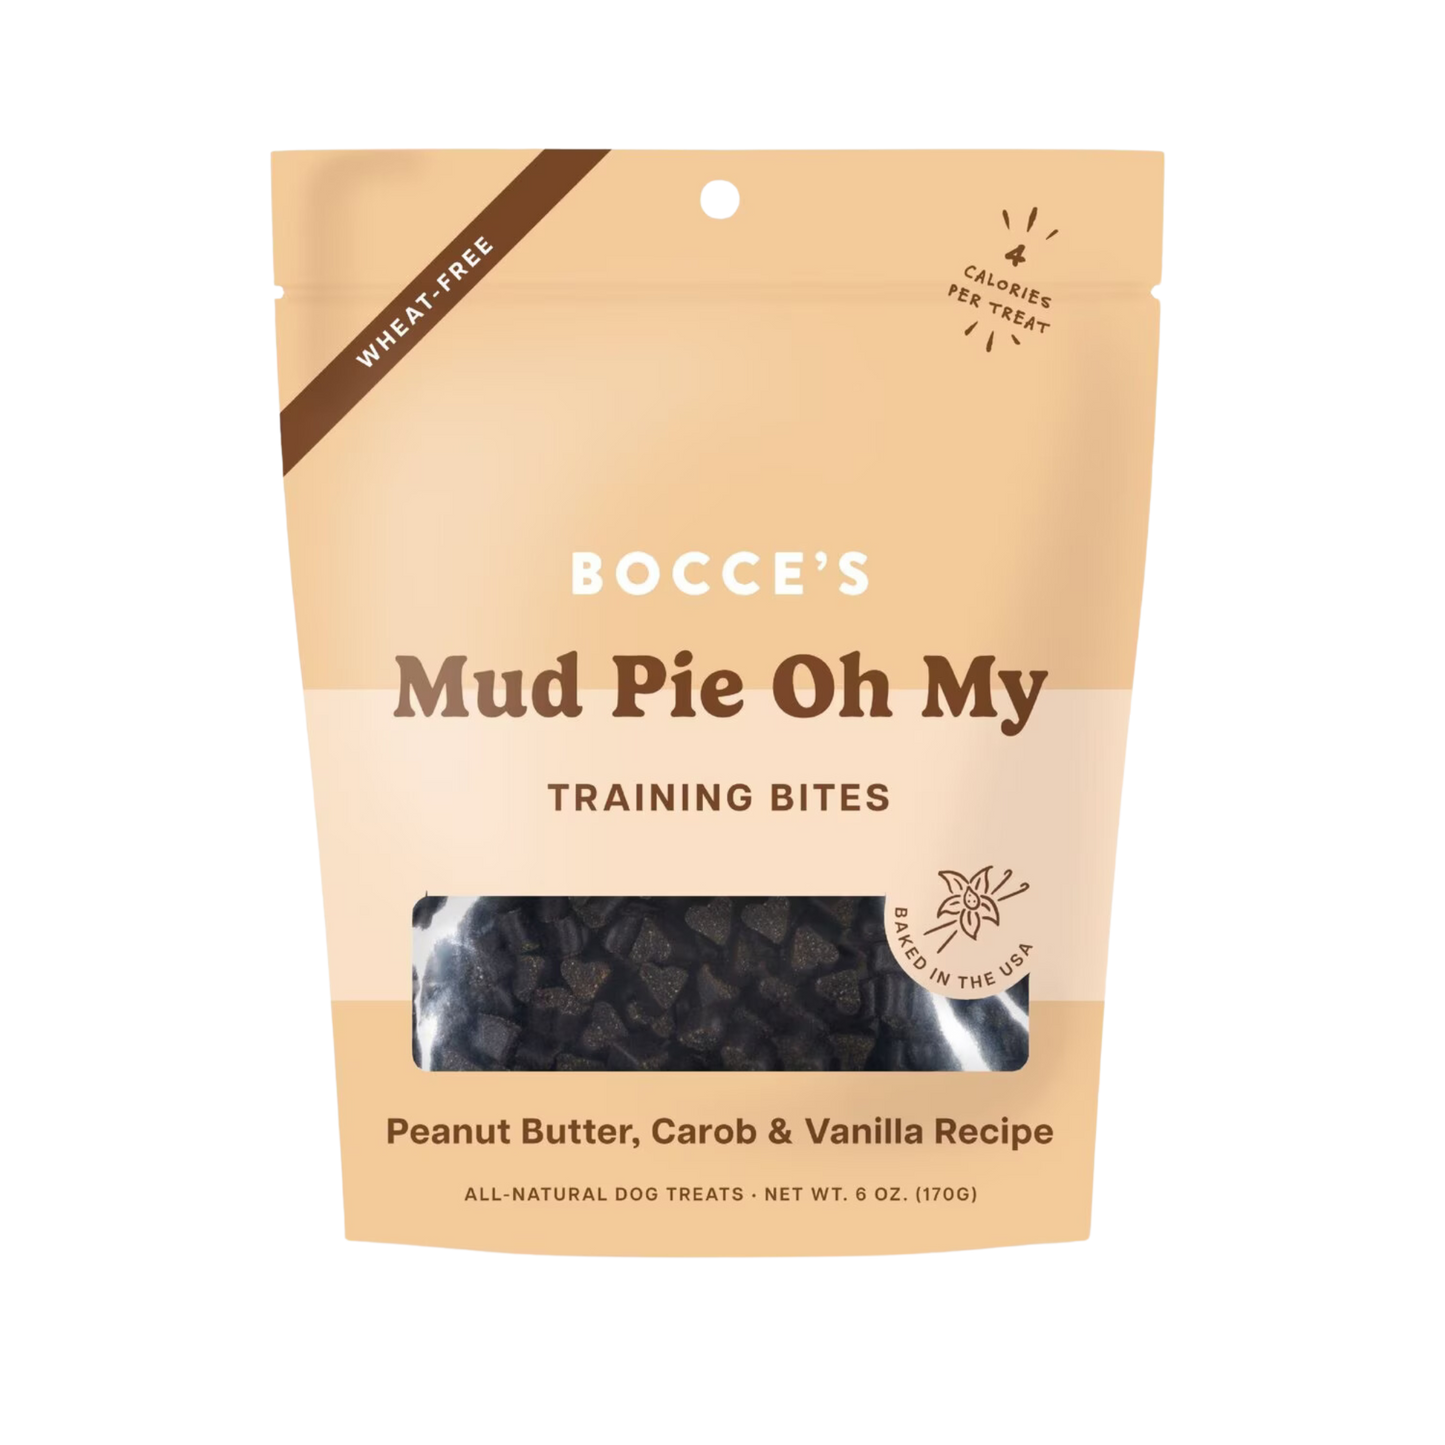 Bocce's Mud Pie Oh My 6oz Training Bites